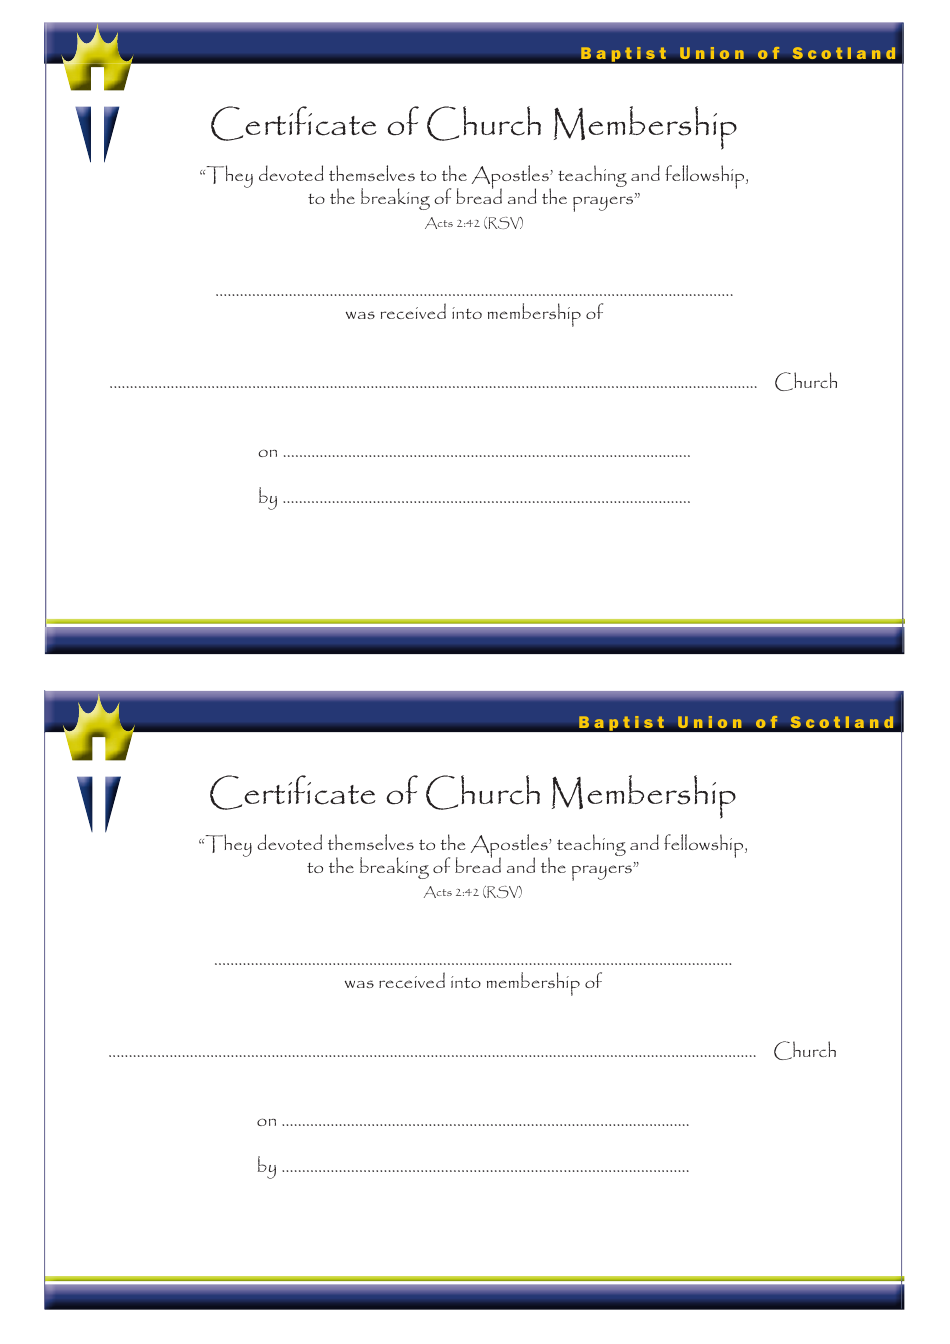 Certificate of Church Membership Templates - Baptist Union of Scotland